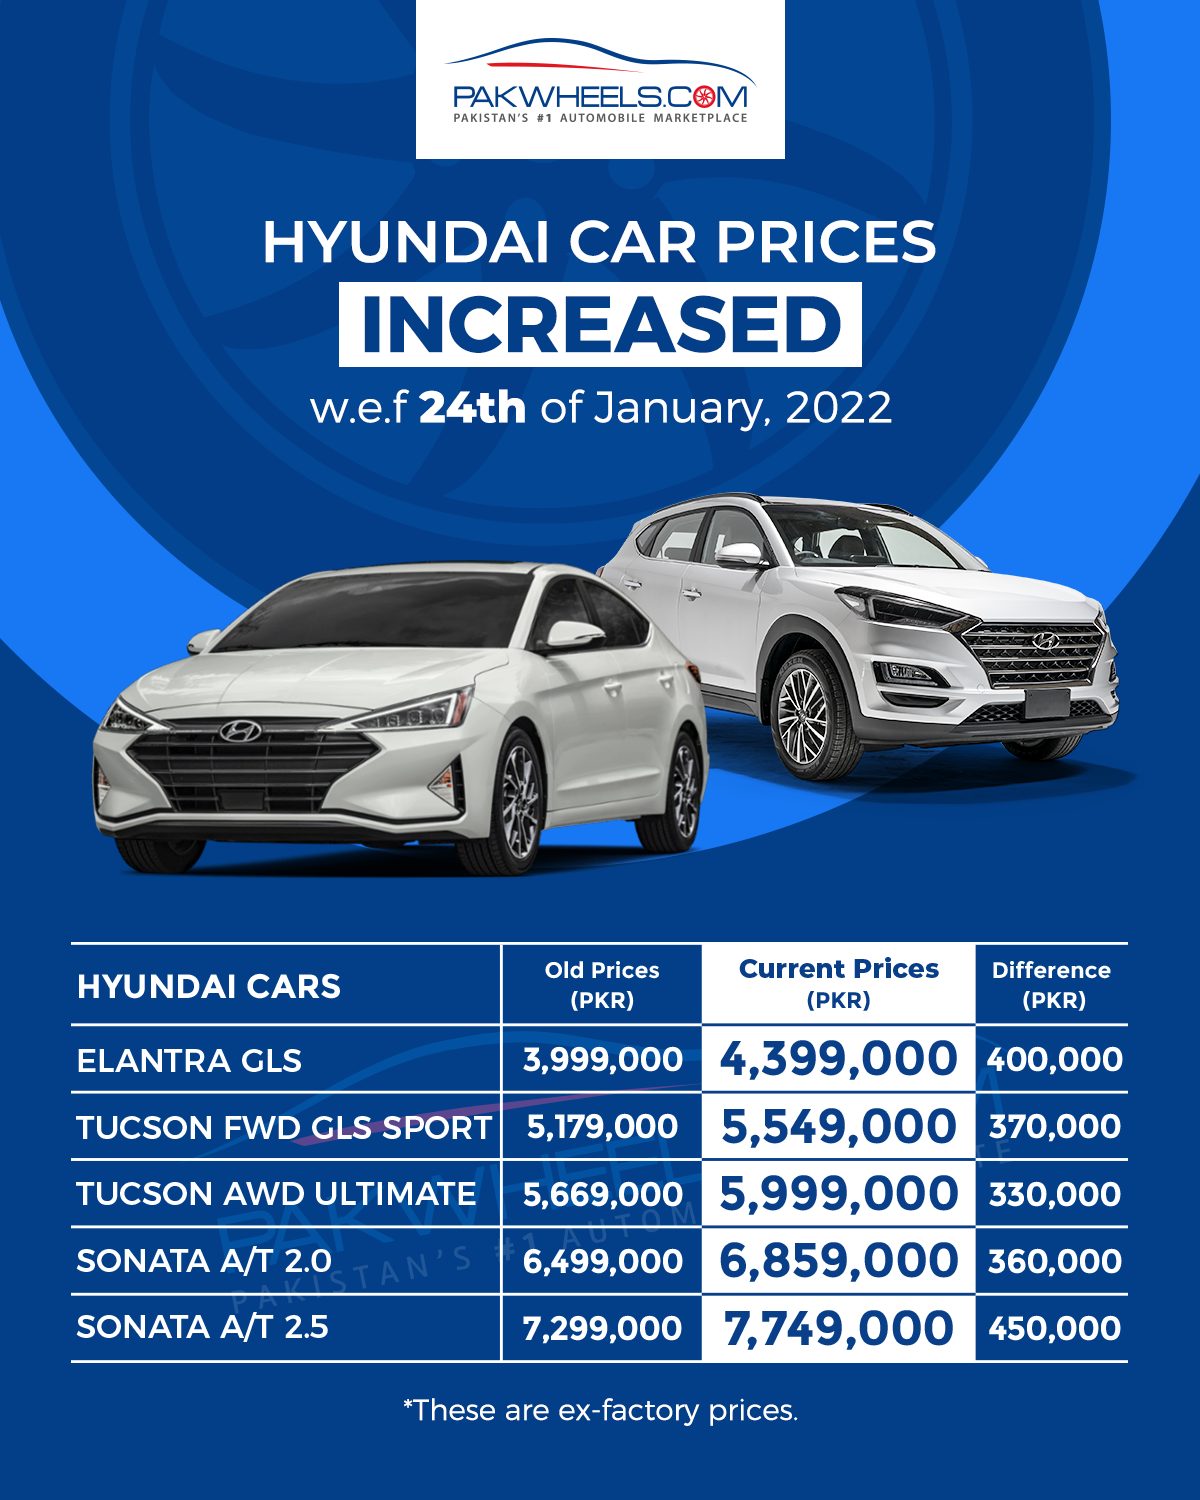 edmunds new car pricing